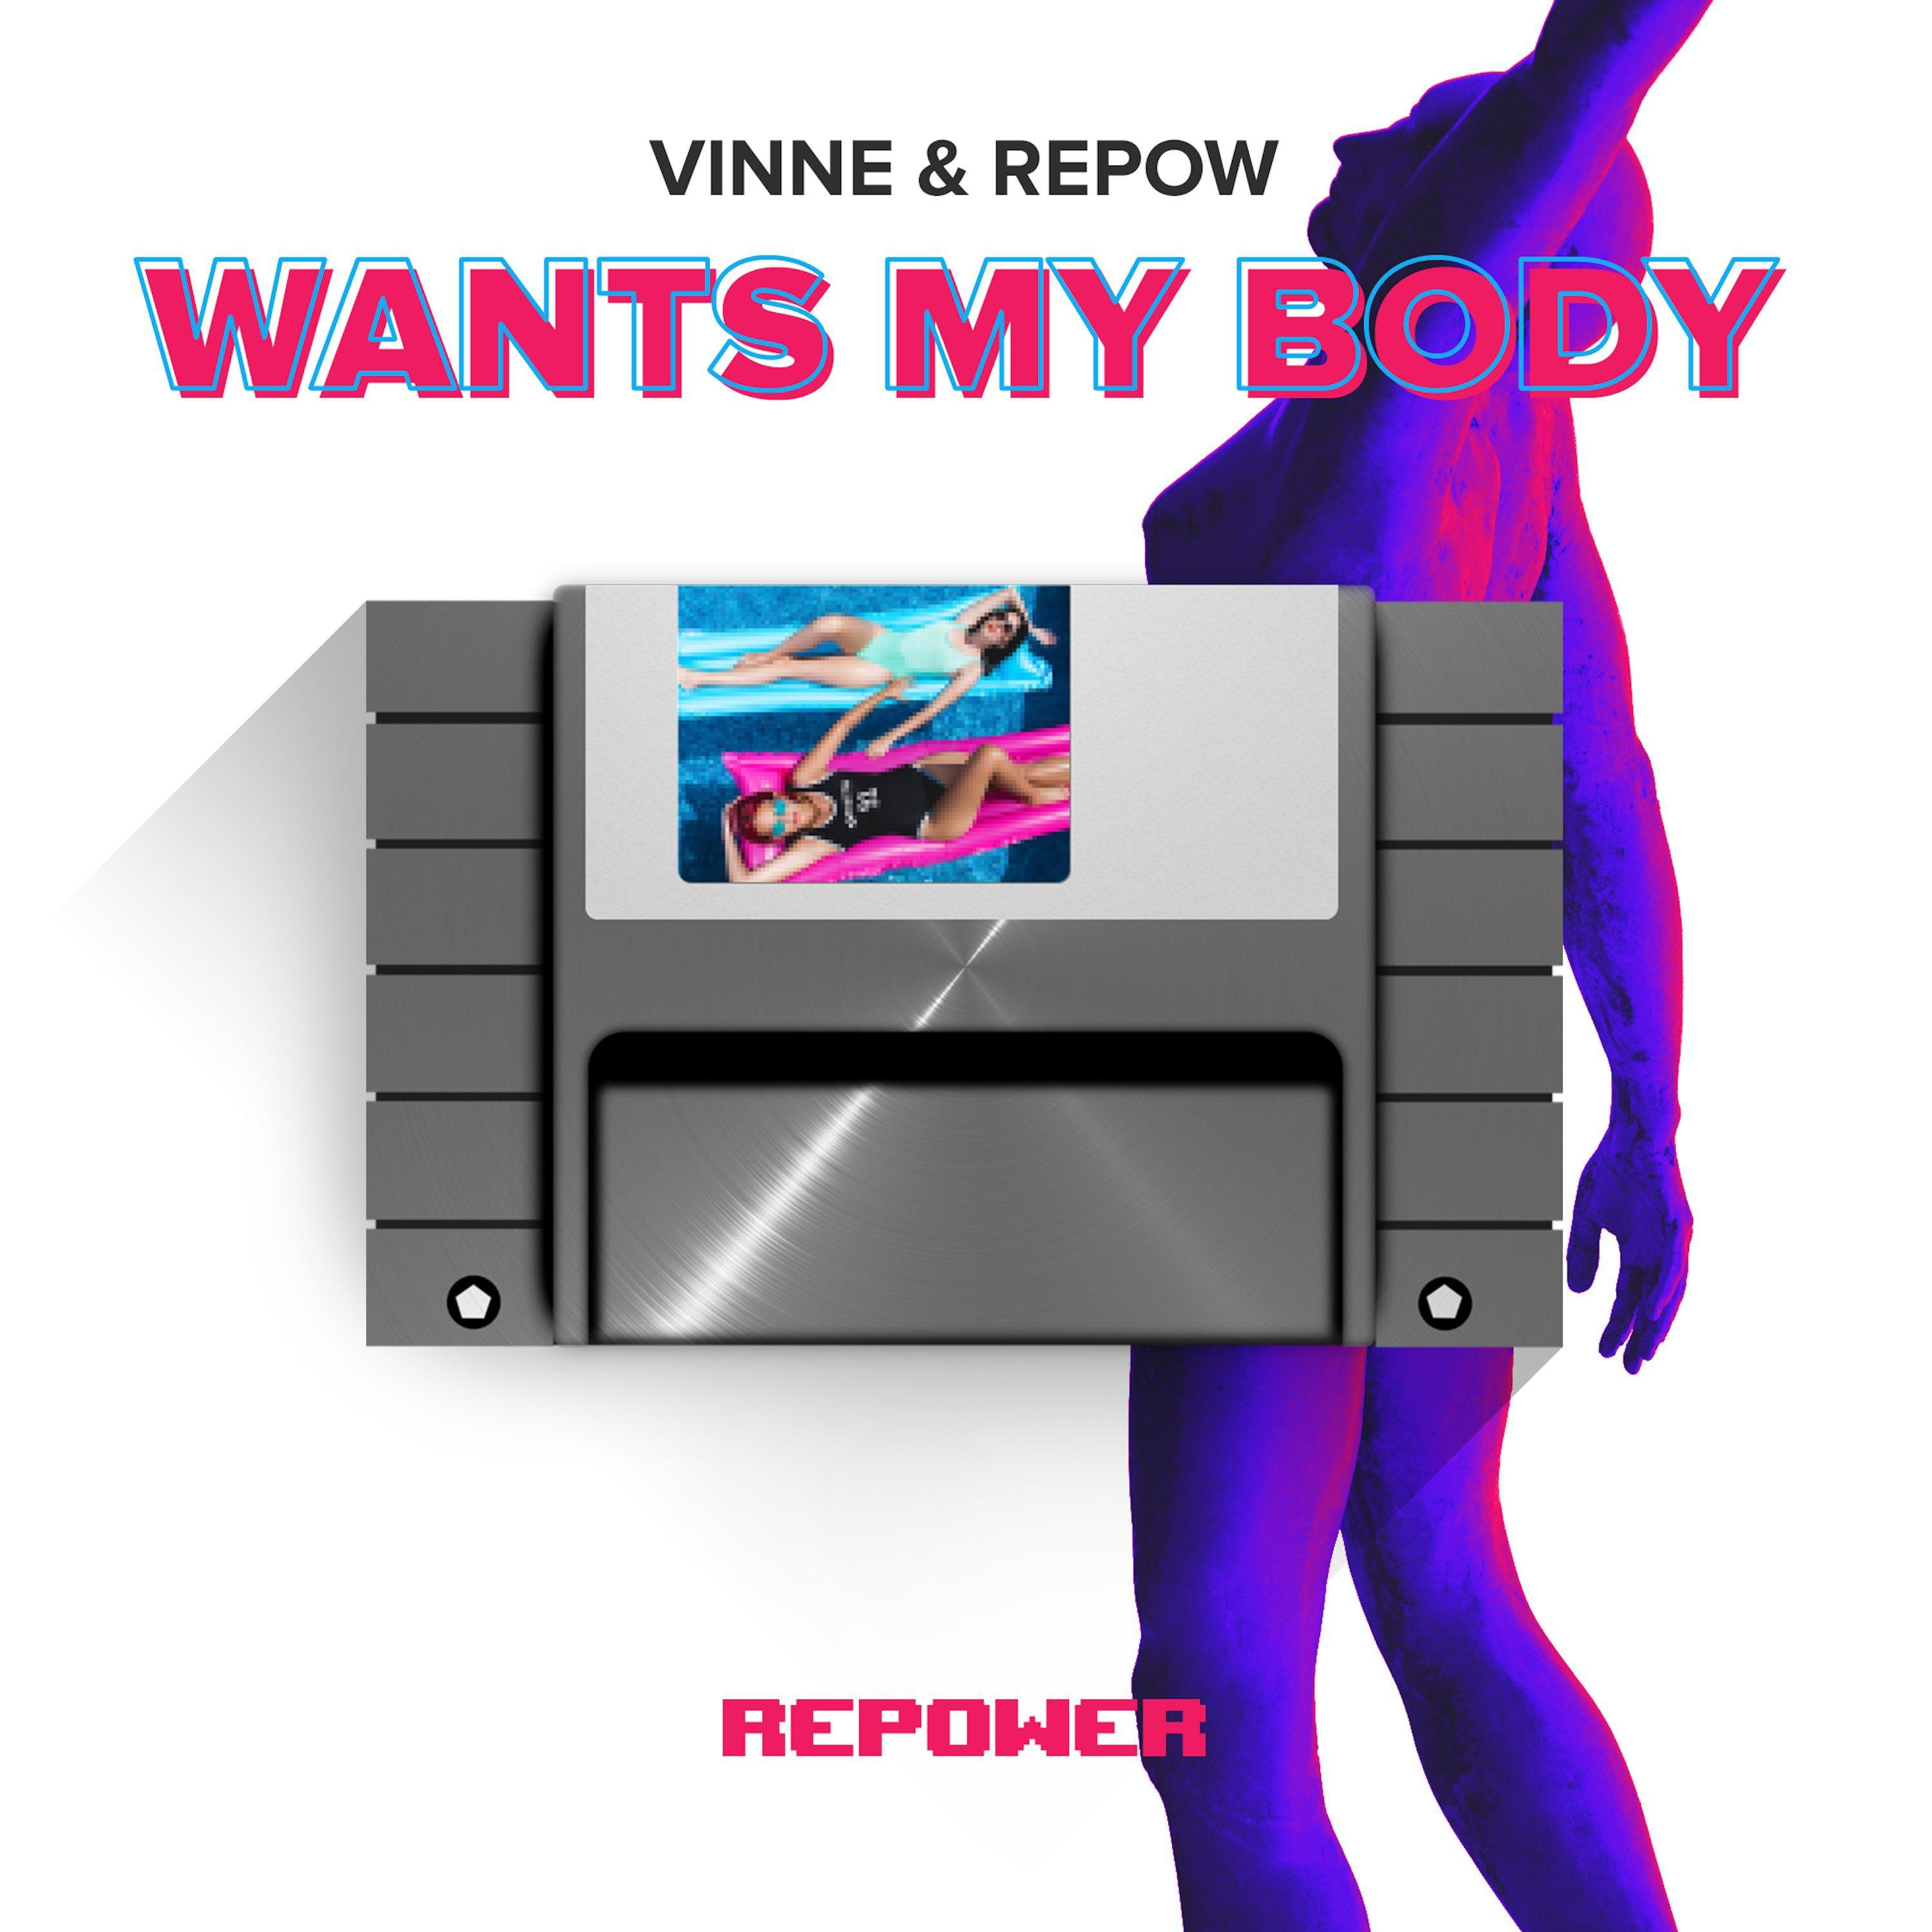 Want's My Body